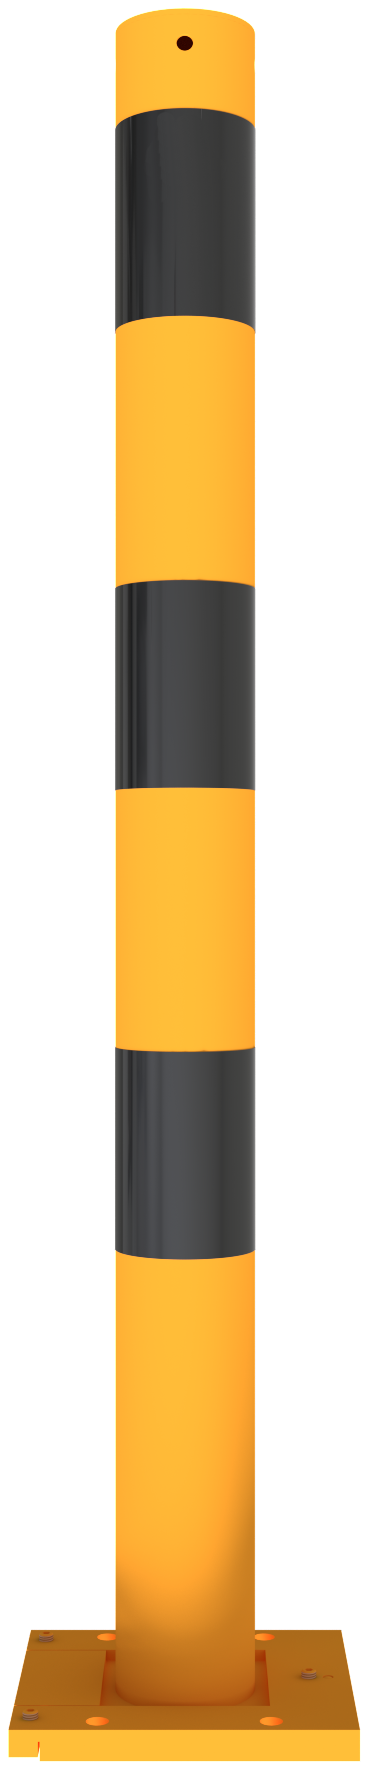 Modellbeispiel: Absperrpfosten -Bollard- Ø 76 mm (Art. 476apbg)